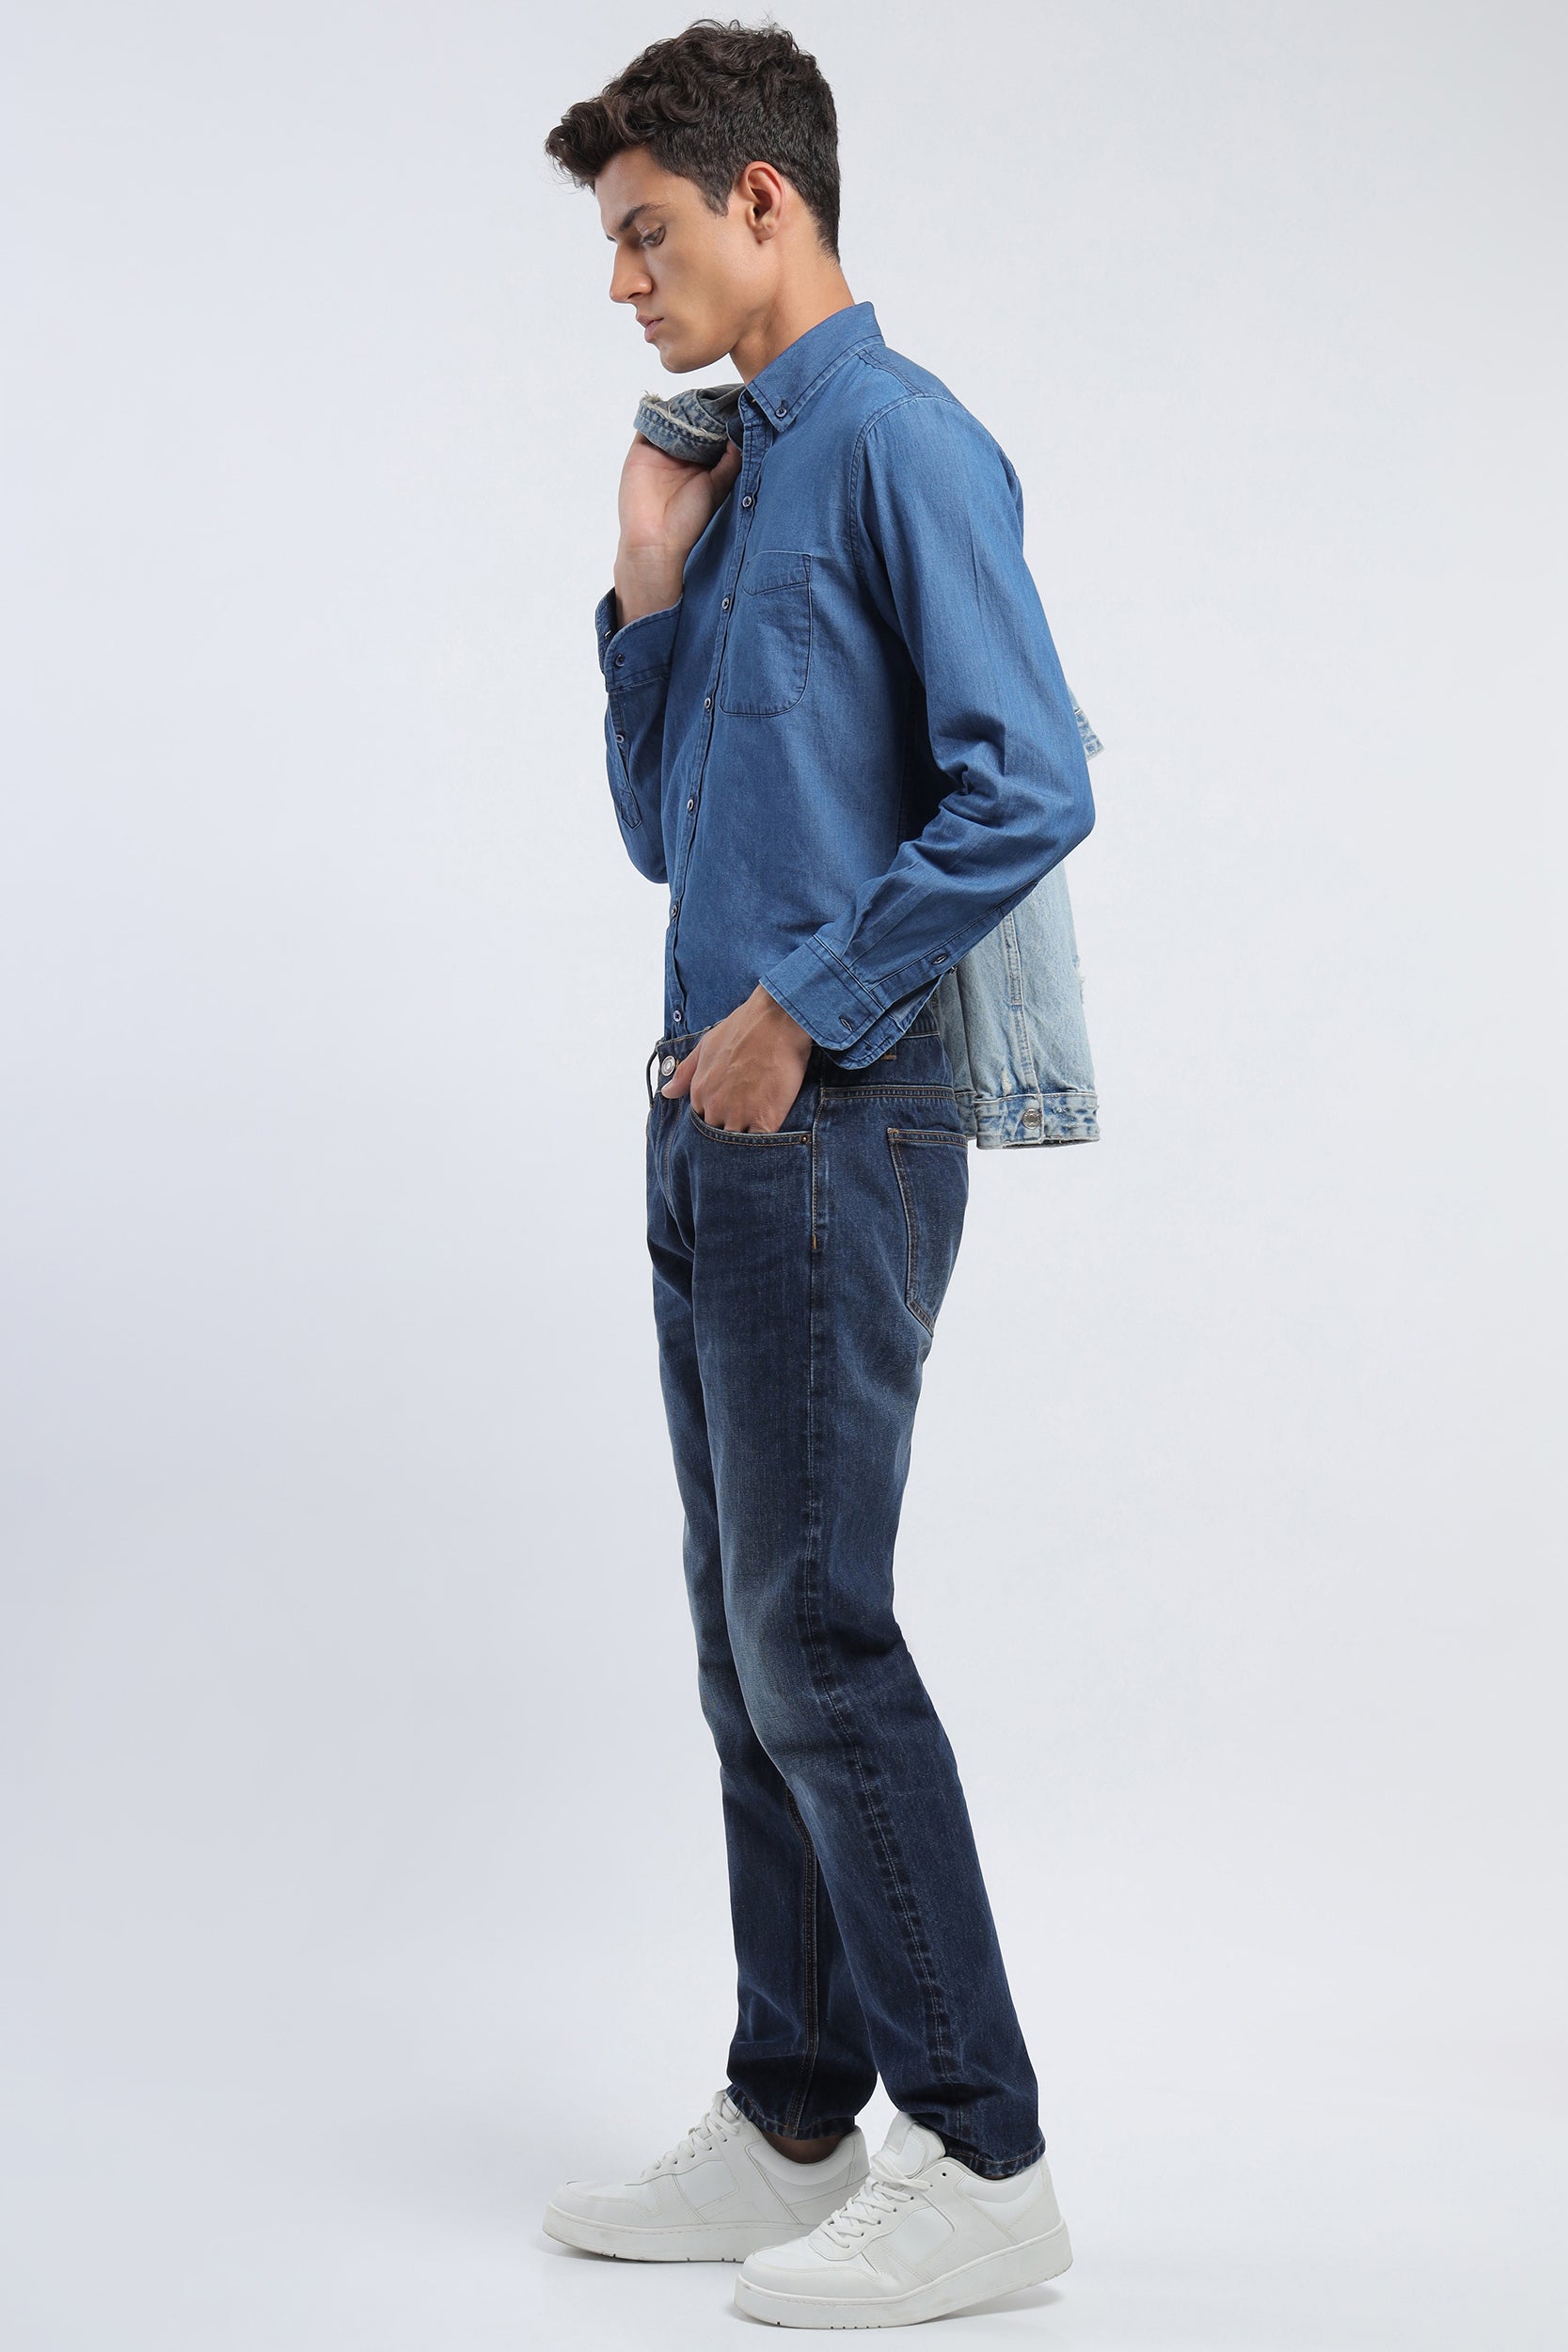 CALVIN KLEIN JEANS Shirt Men SMALL Denim Pockets Faded Grey Spread Collar |  eBay